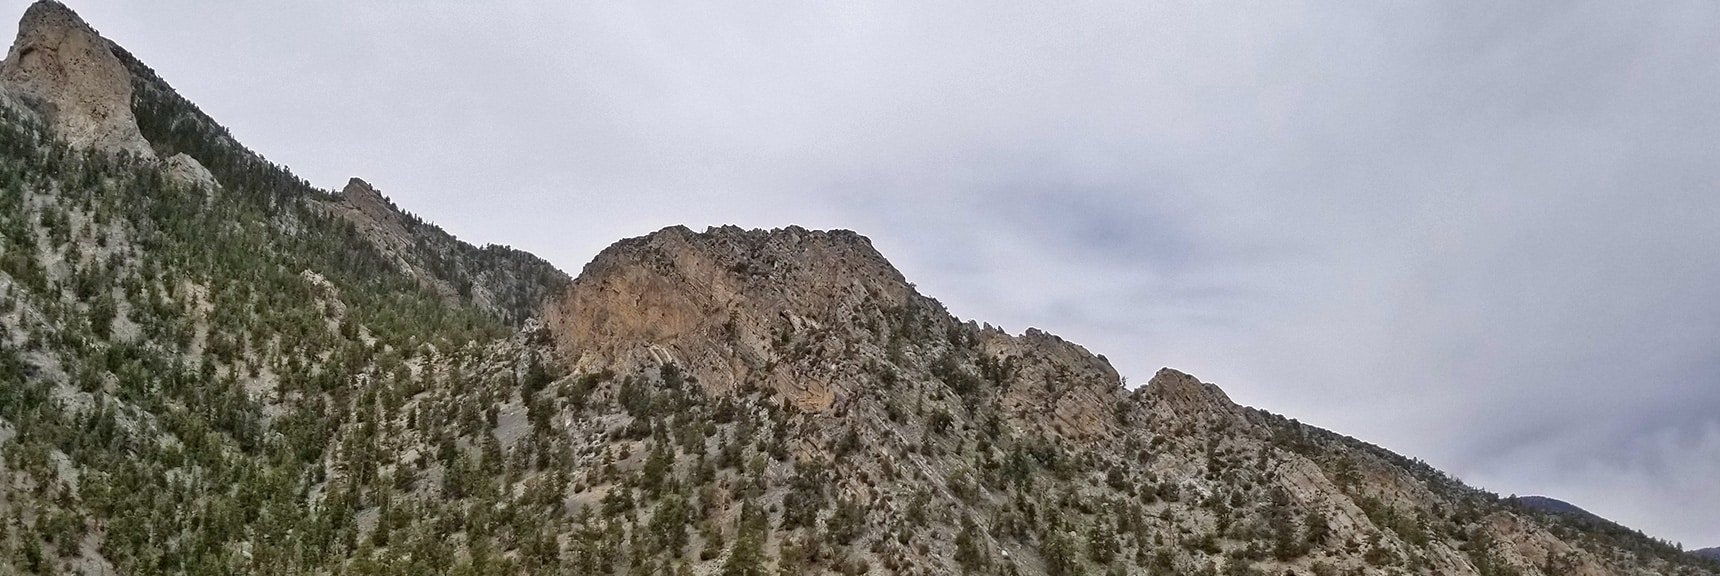 Ridge System Descending McFarland Peak Toward Bonanza Peak Viewed from 9,235ft High Point Bluff | Sawmill Trail to McFarland Peak | Spring Mountains, Nevada